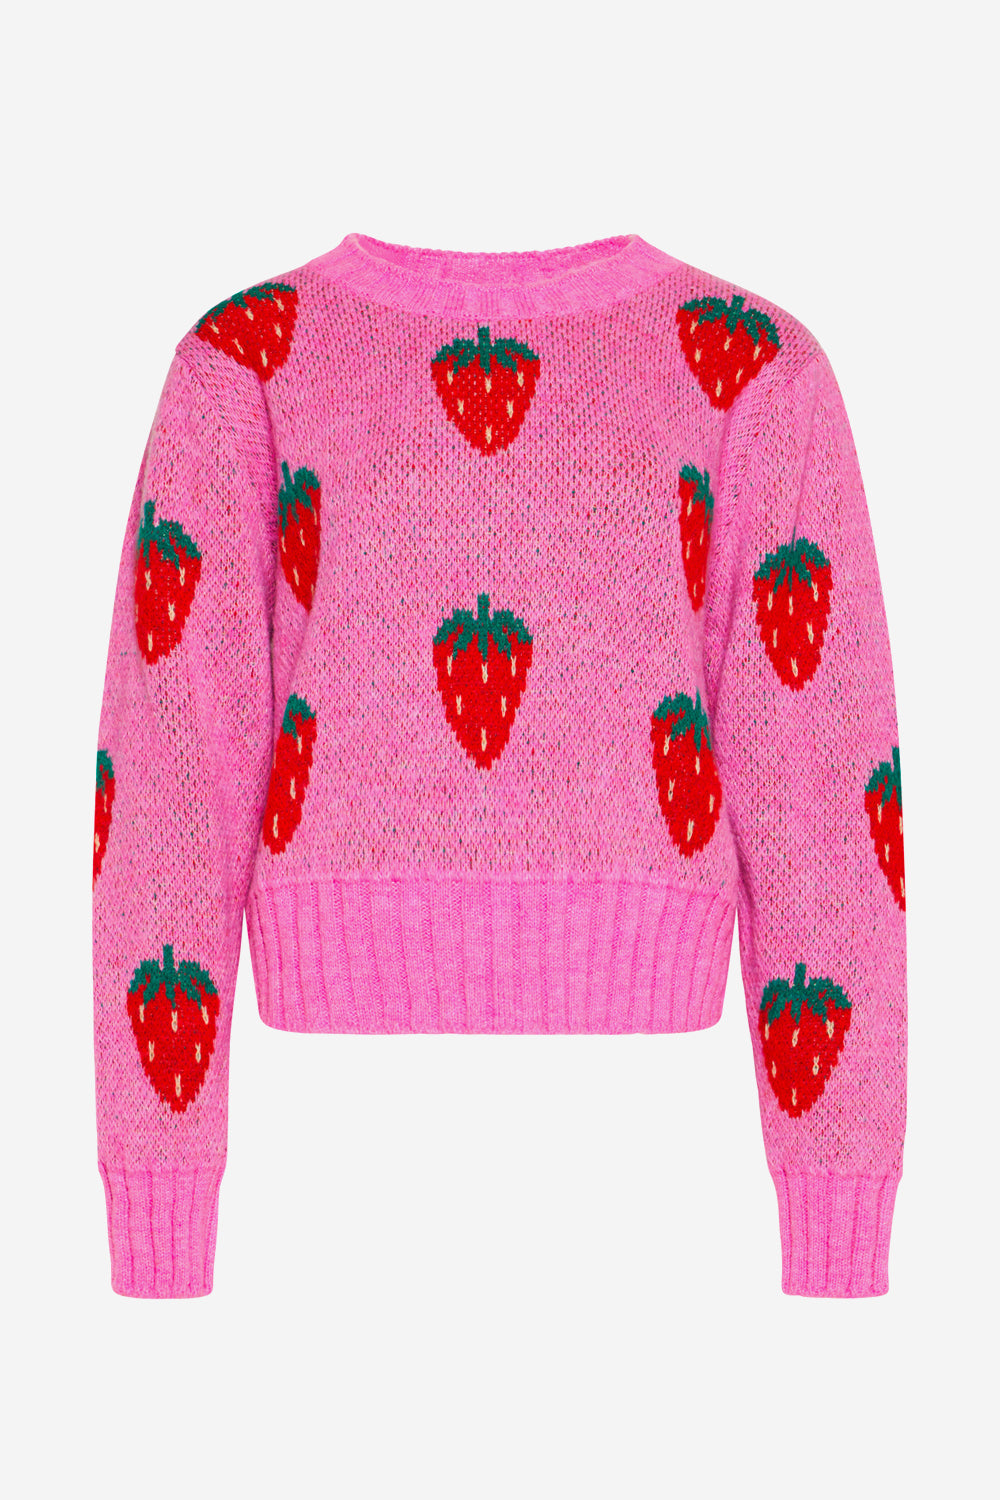 Cilia Knit Sweater Pink